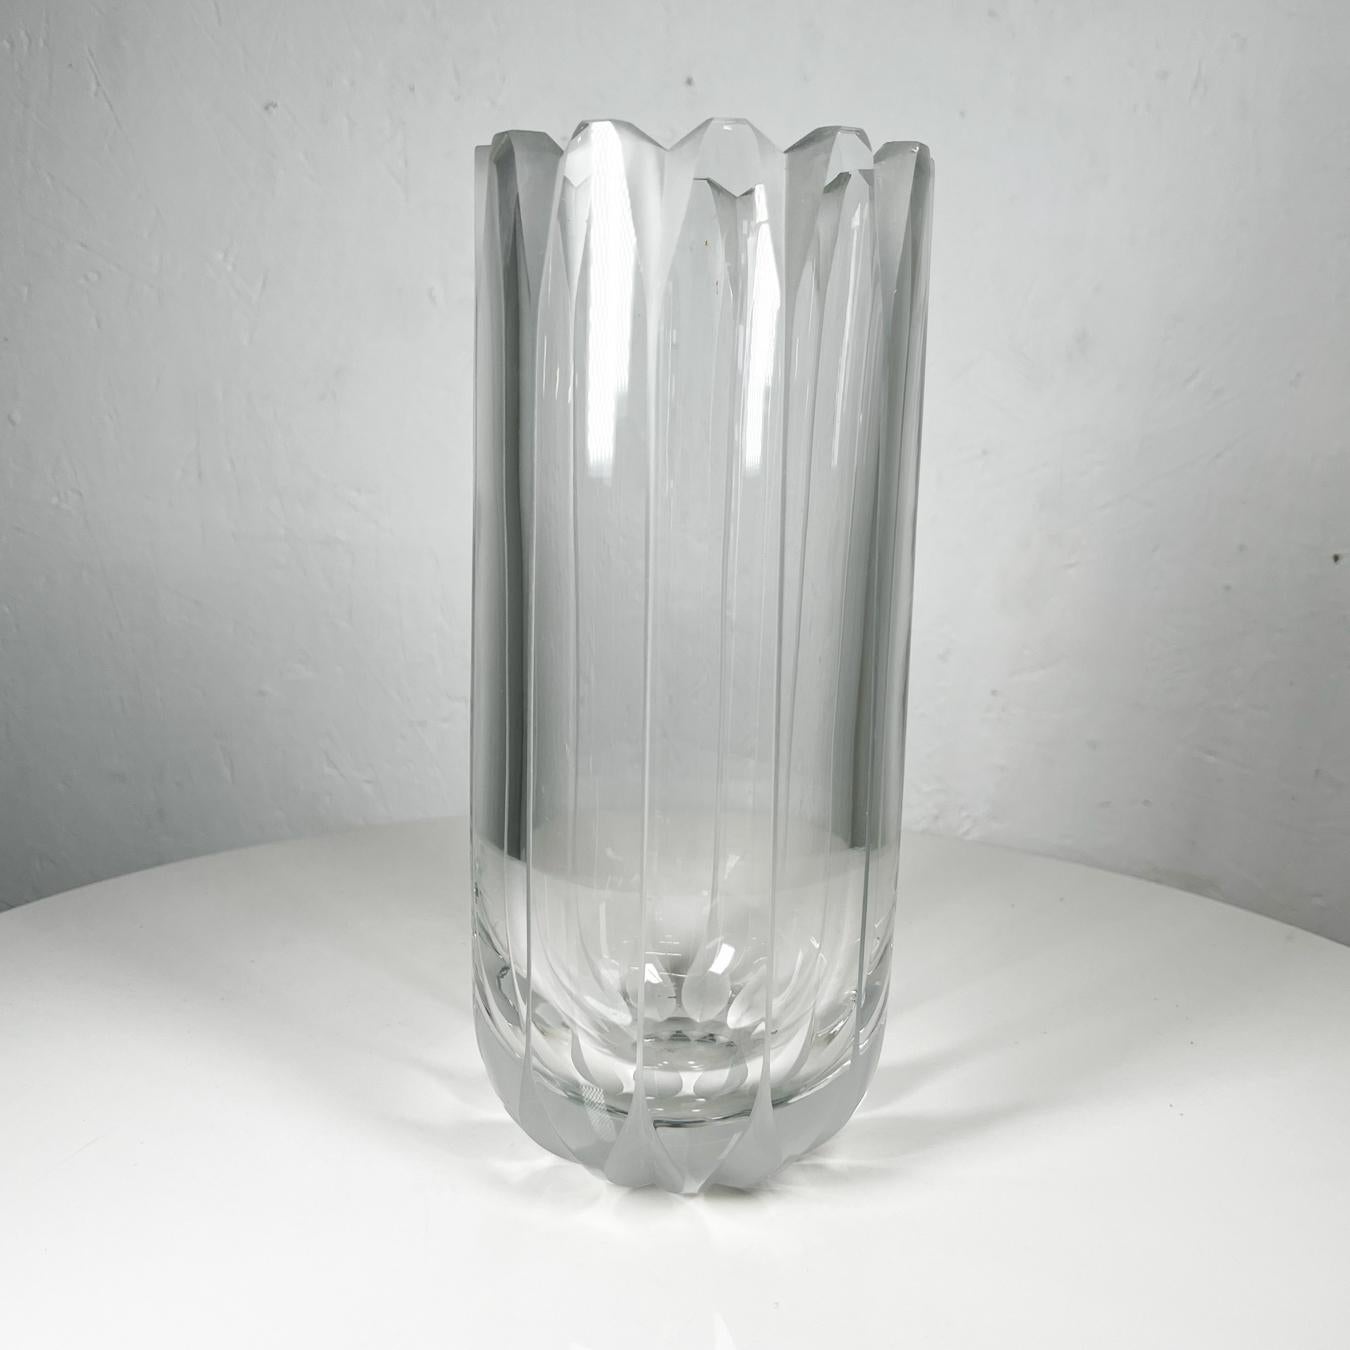 1970s Crystal flower vase style Orrefors Scandinavian Art Glass
Unmarked
Measures: 10.25 x 4.5 diameter
Original vintage condition.
Refer to images.
 